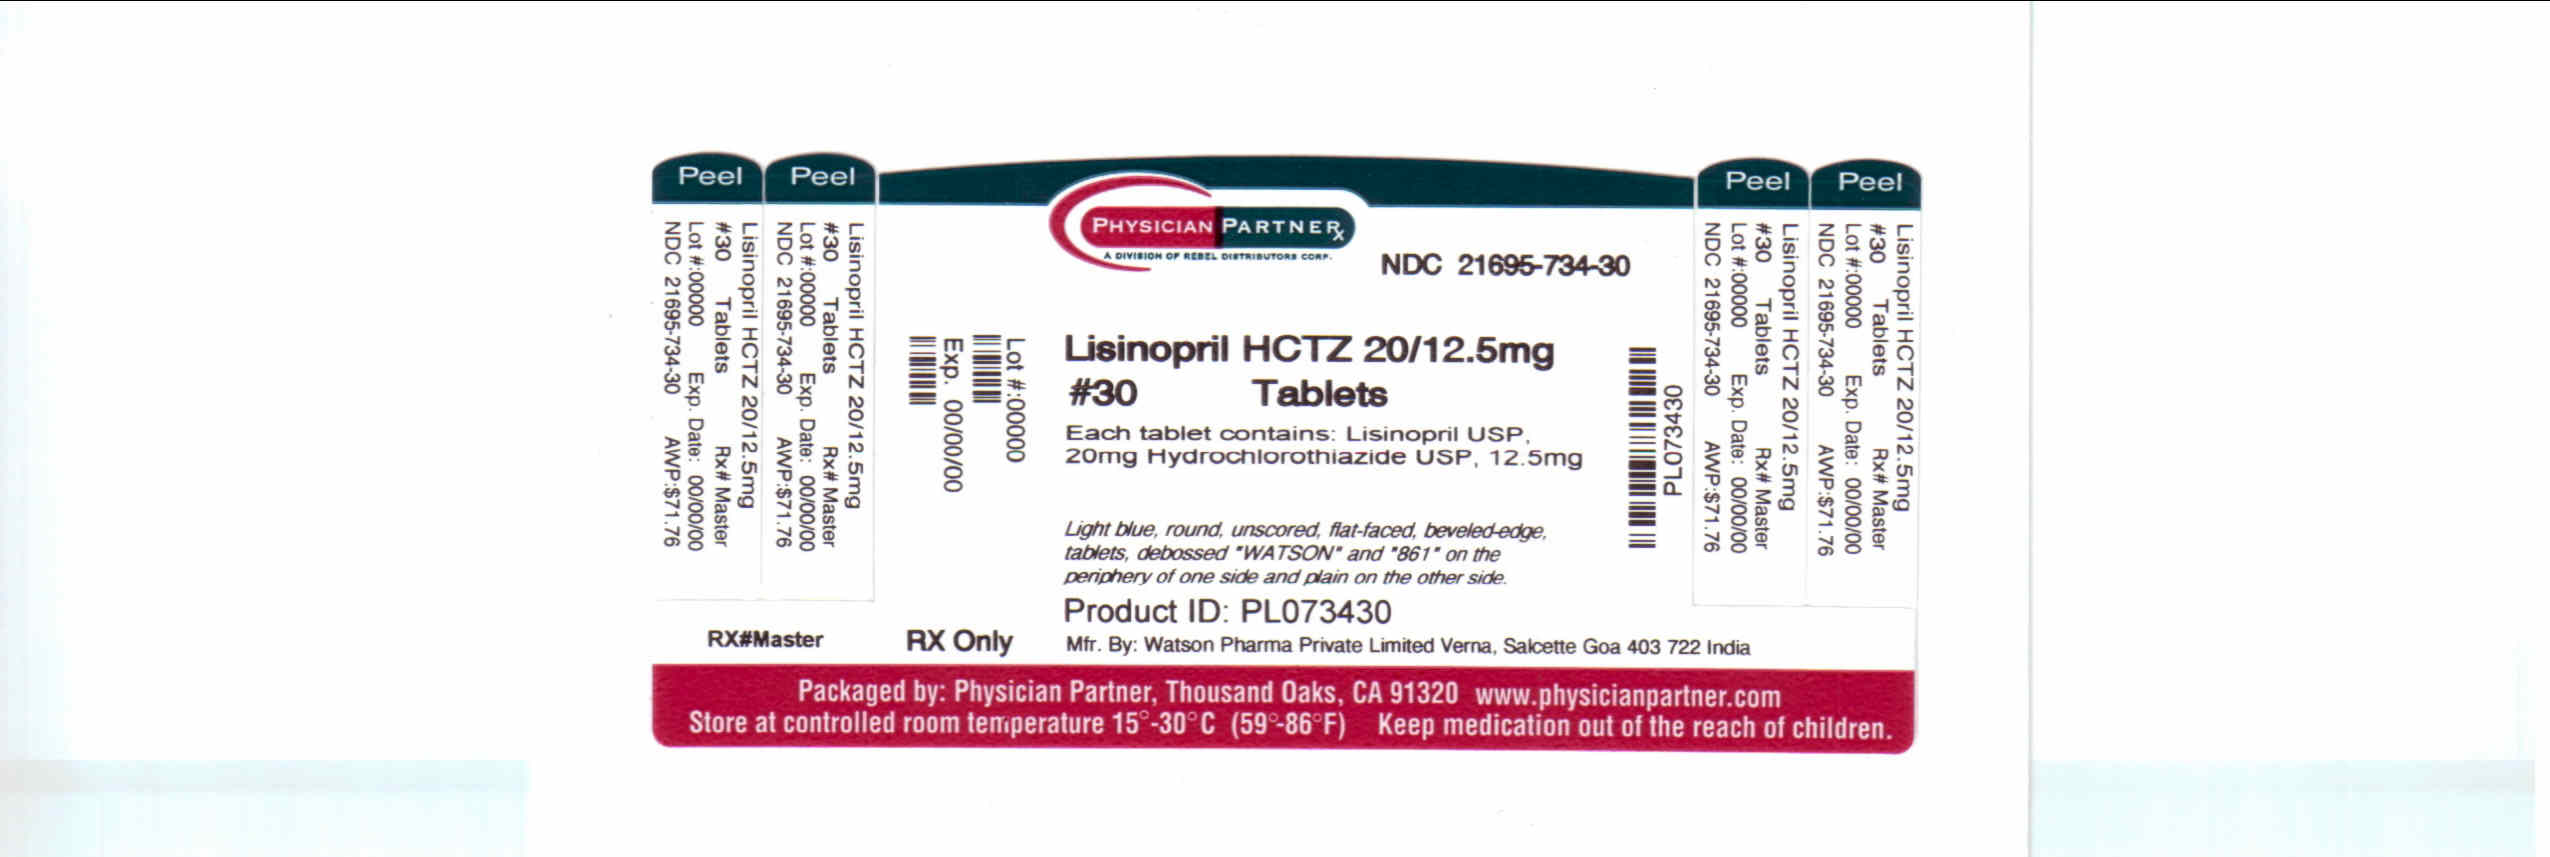 Lisinopril HCTZ 20/12.5mg